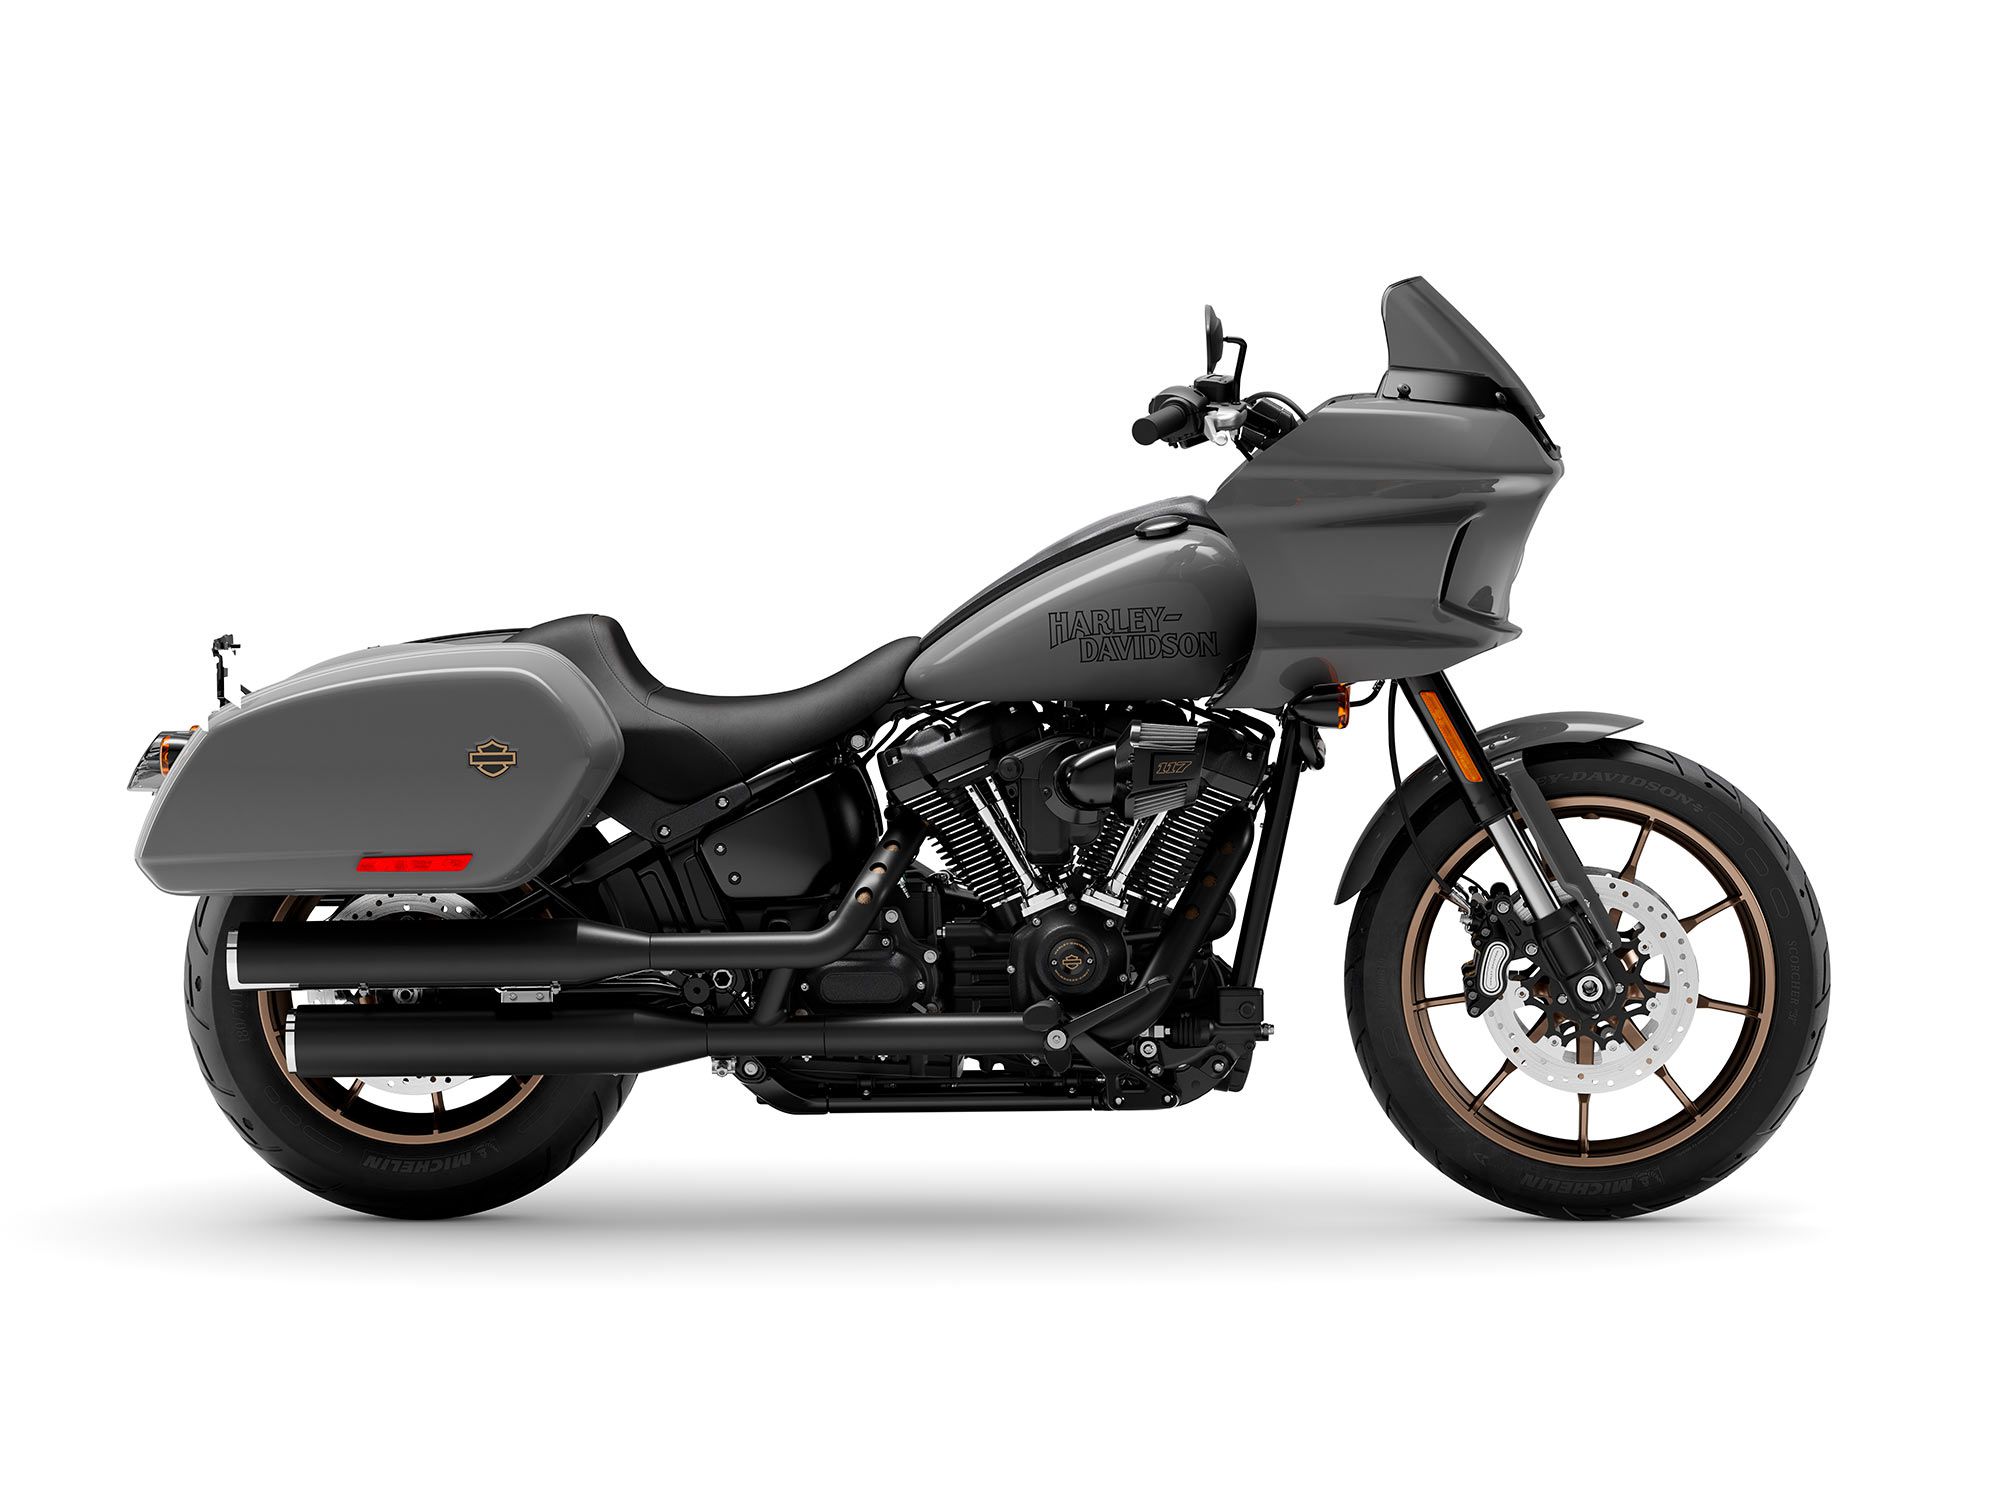 2022 Harley-Davidson Low Rider ST in Gunship Gray.